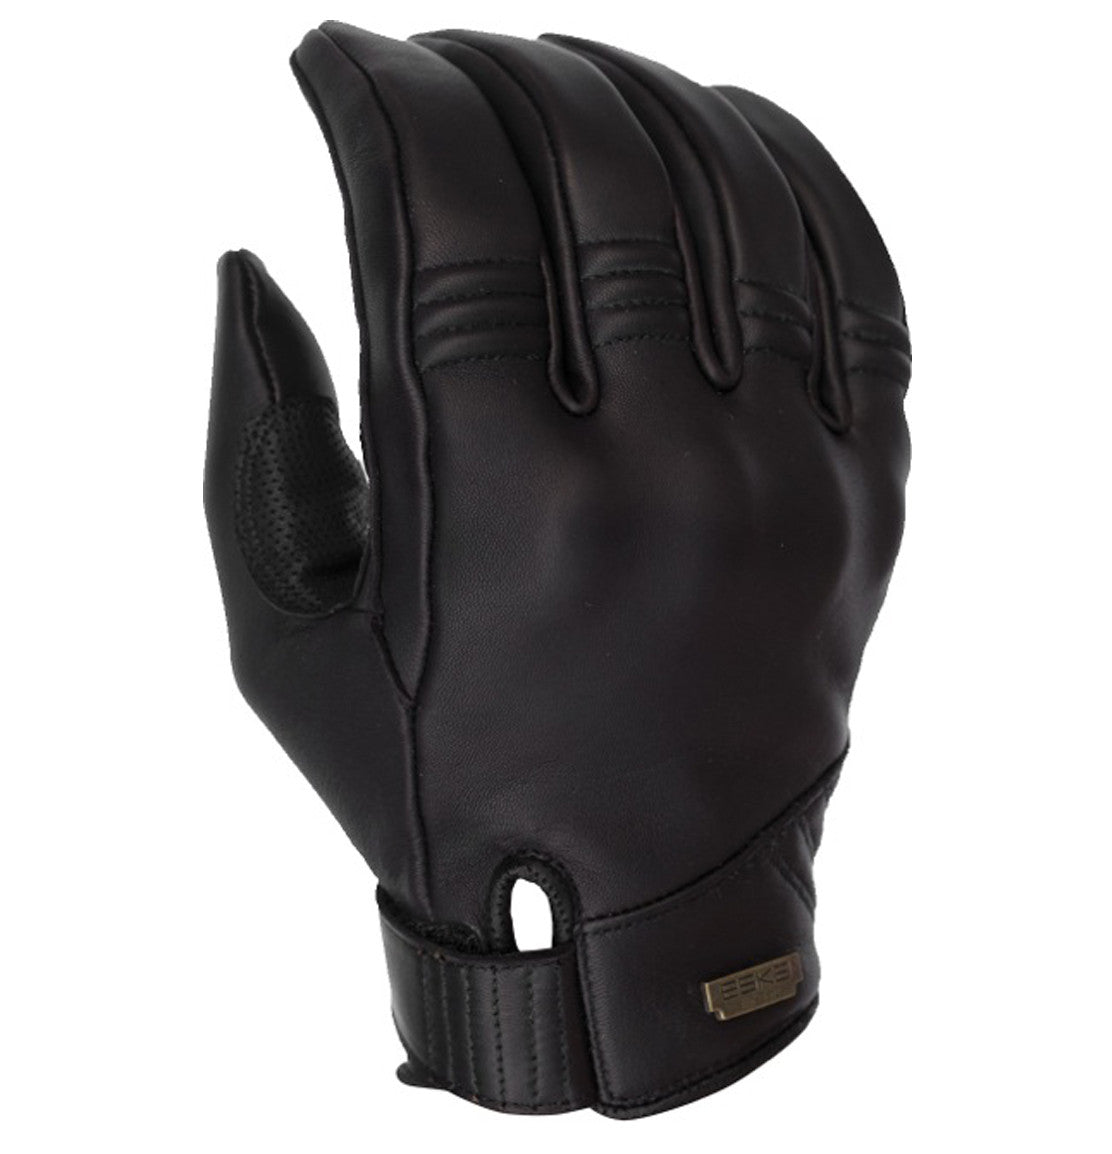 ESKA silky black leather motorcycle glove